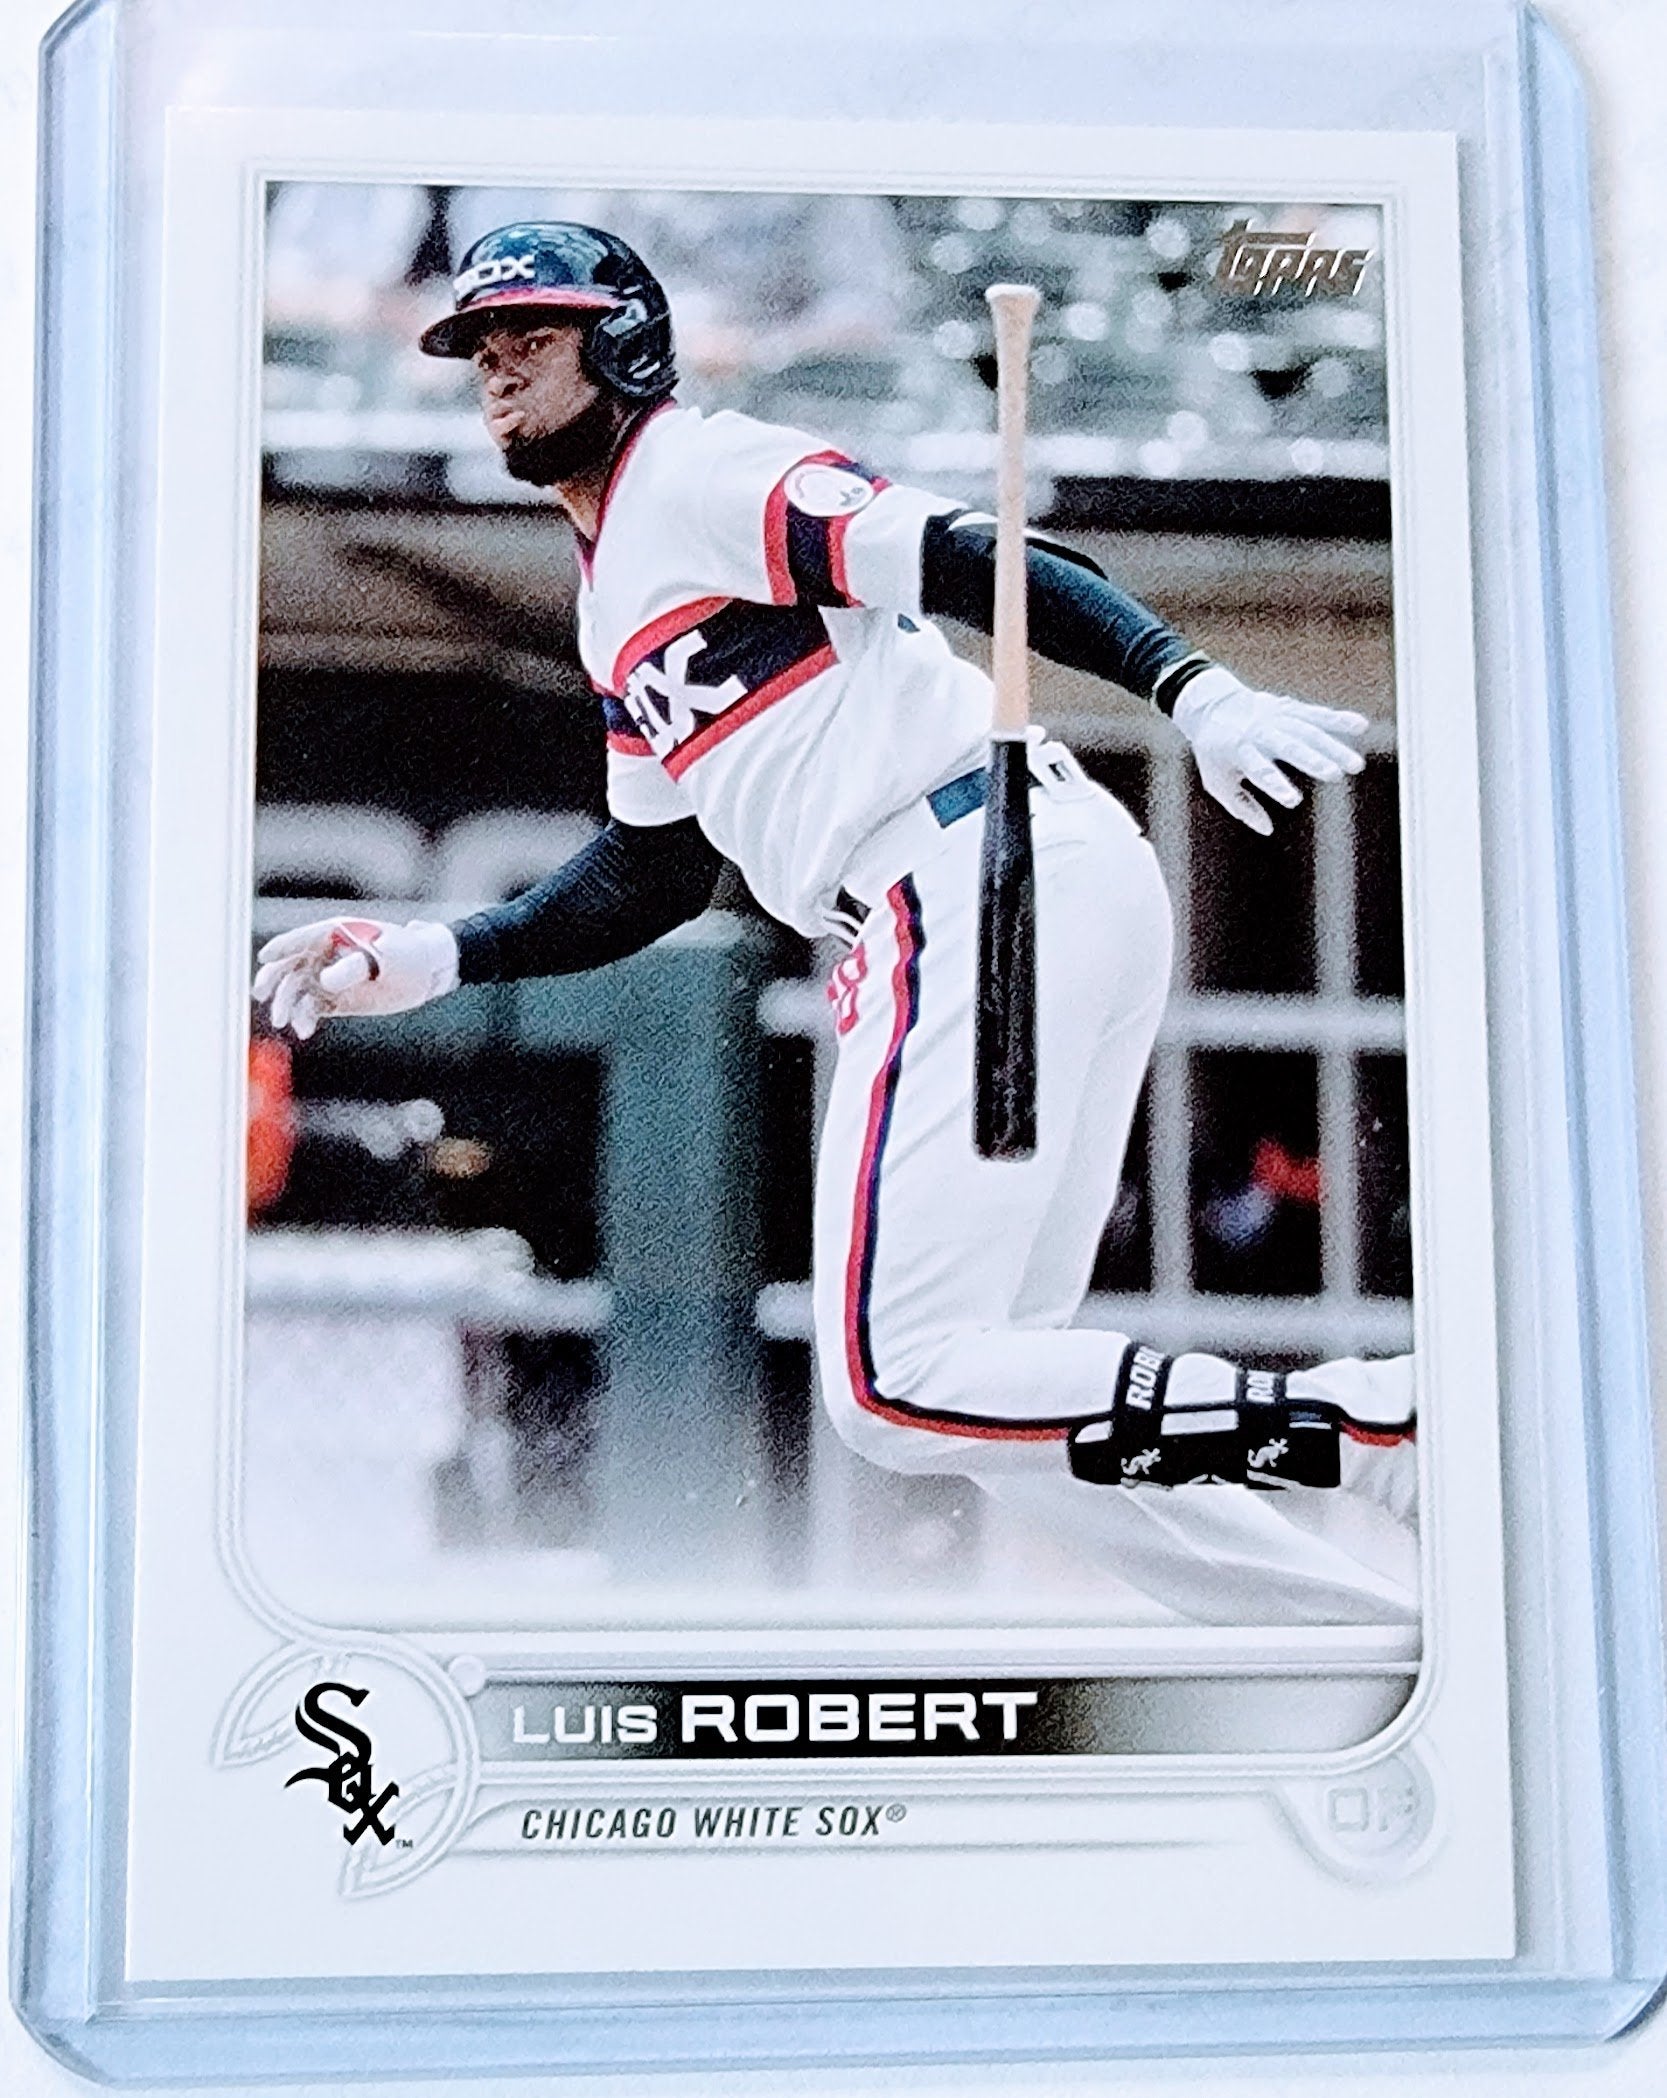 2022 Topps Luis Robert Chicago White Sox Baseball Trading Card